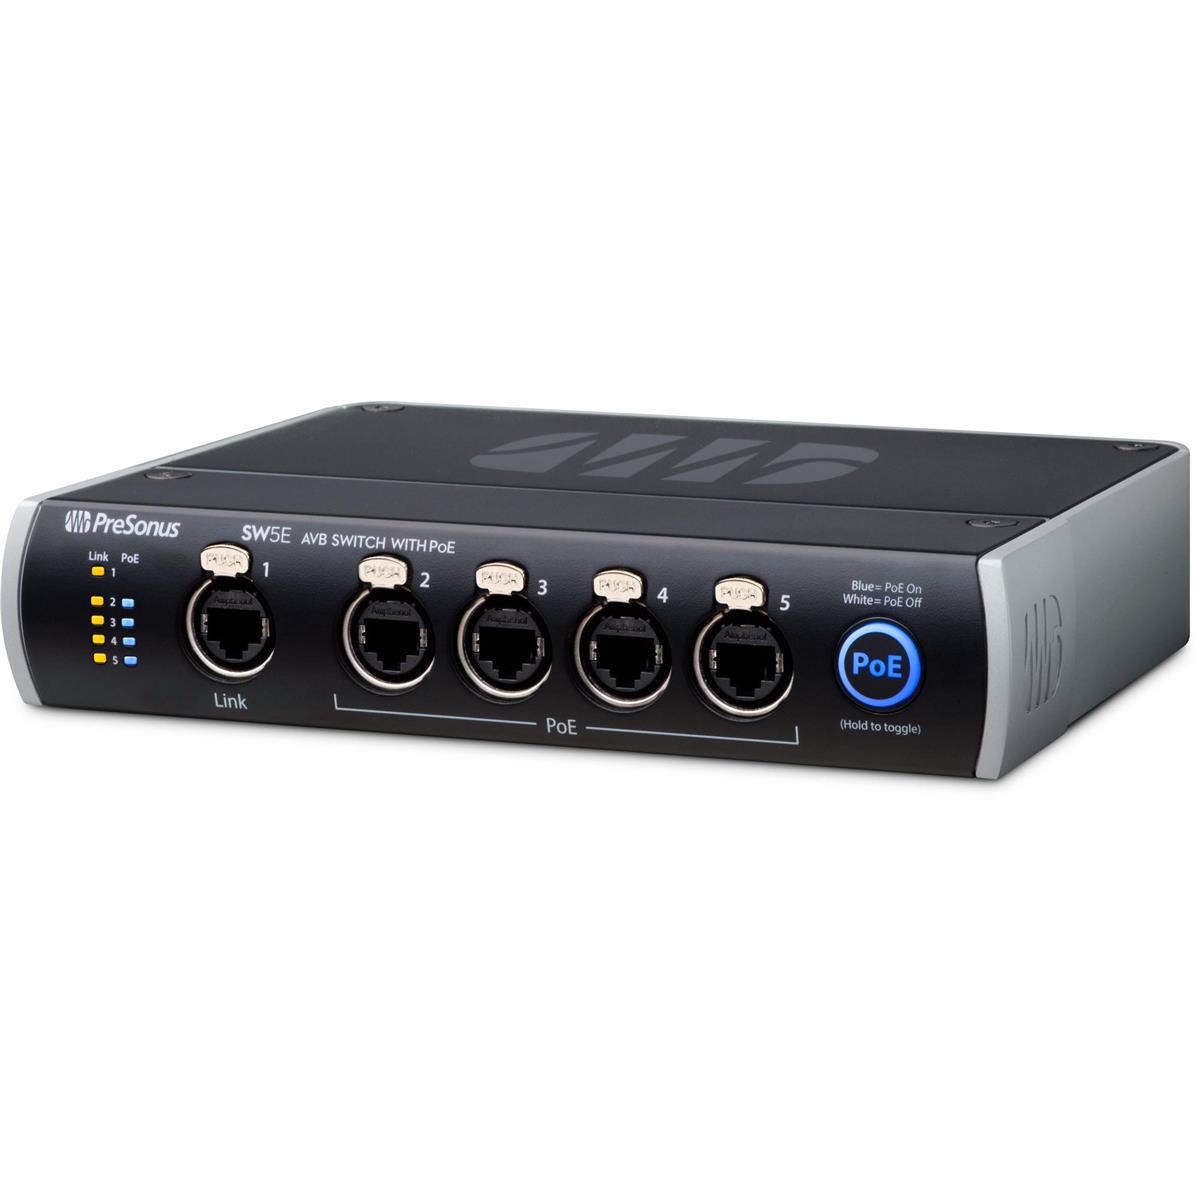 Image of PreSonus SW5E 5-port Audio Video Bridging Switch with PoE